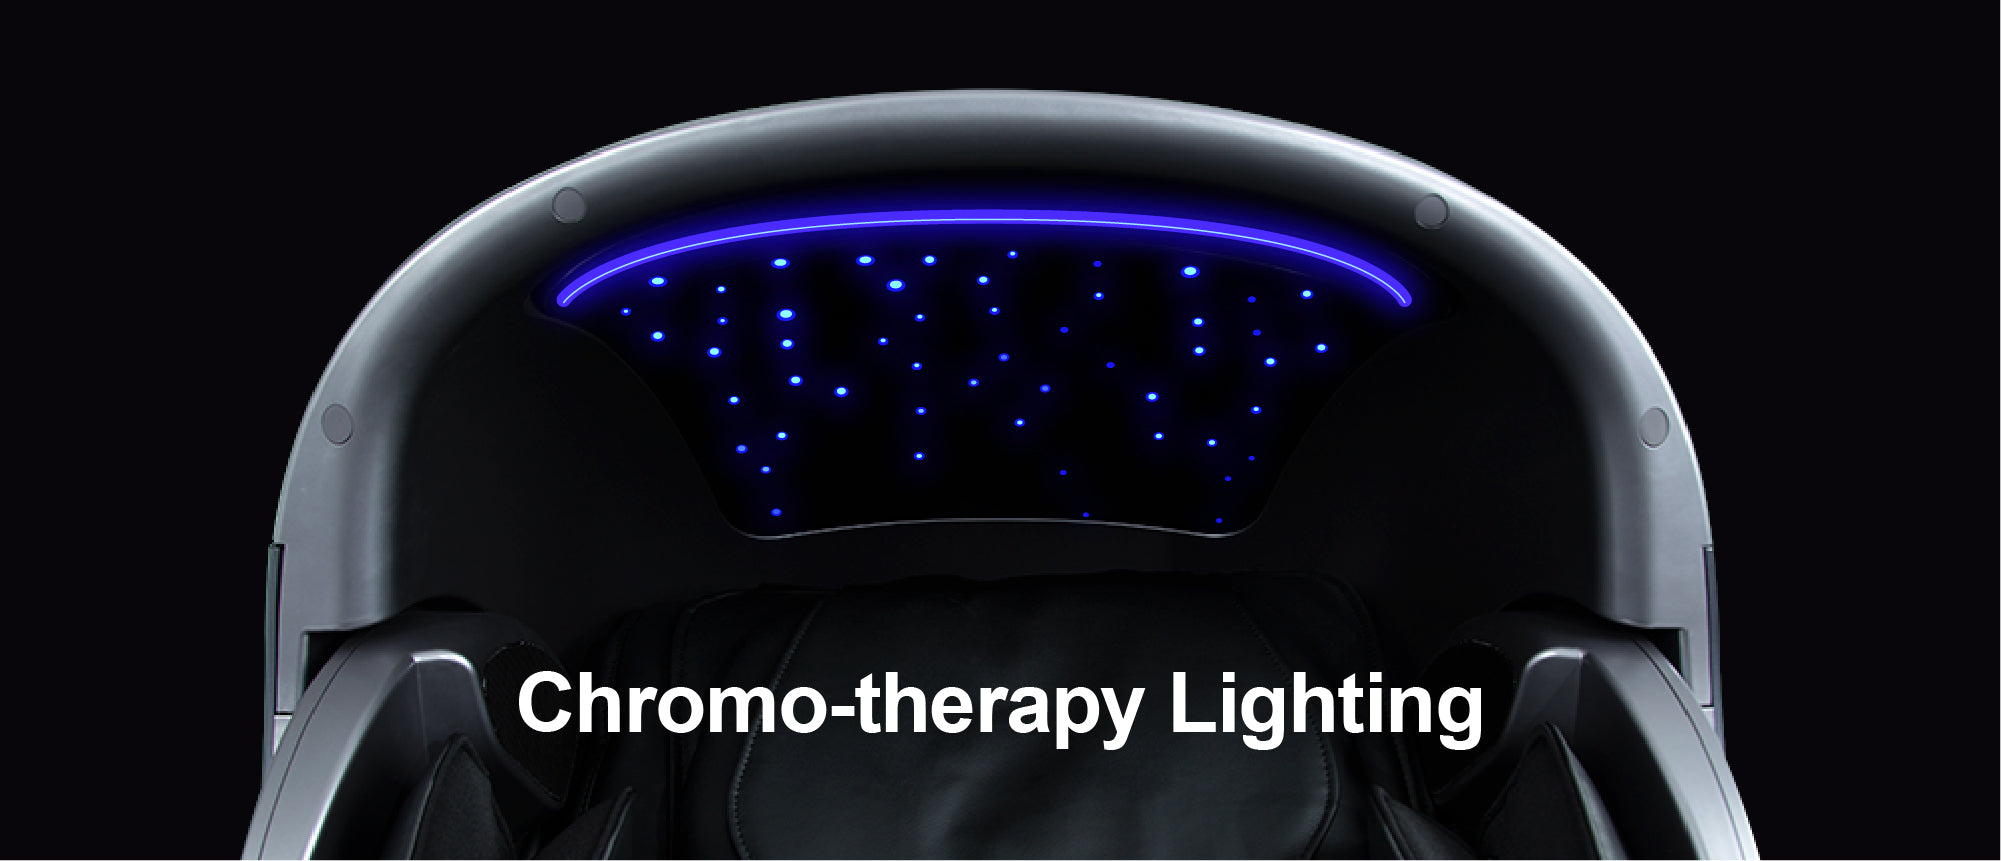 Chromo-therapy lightning